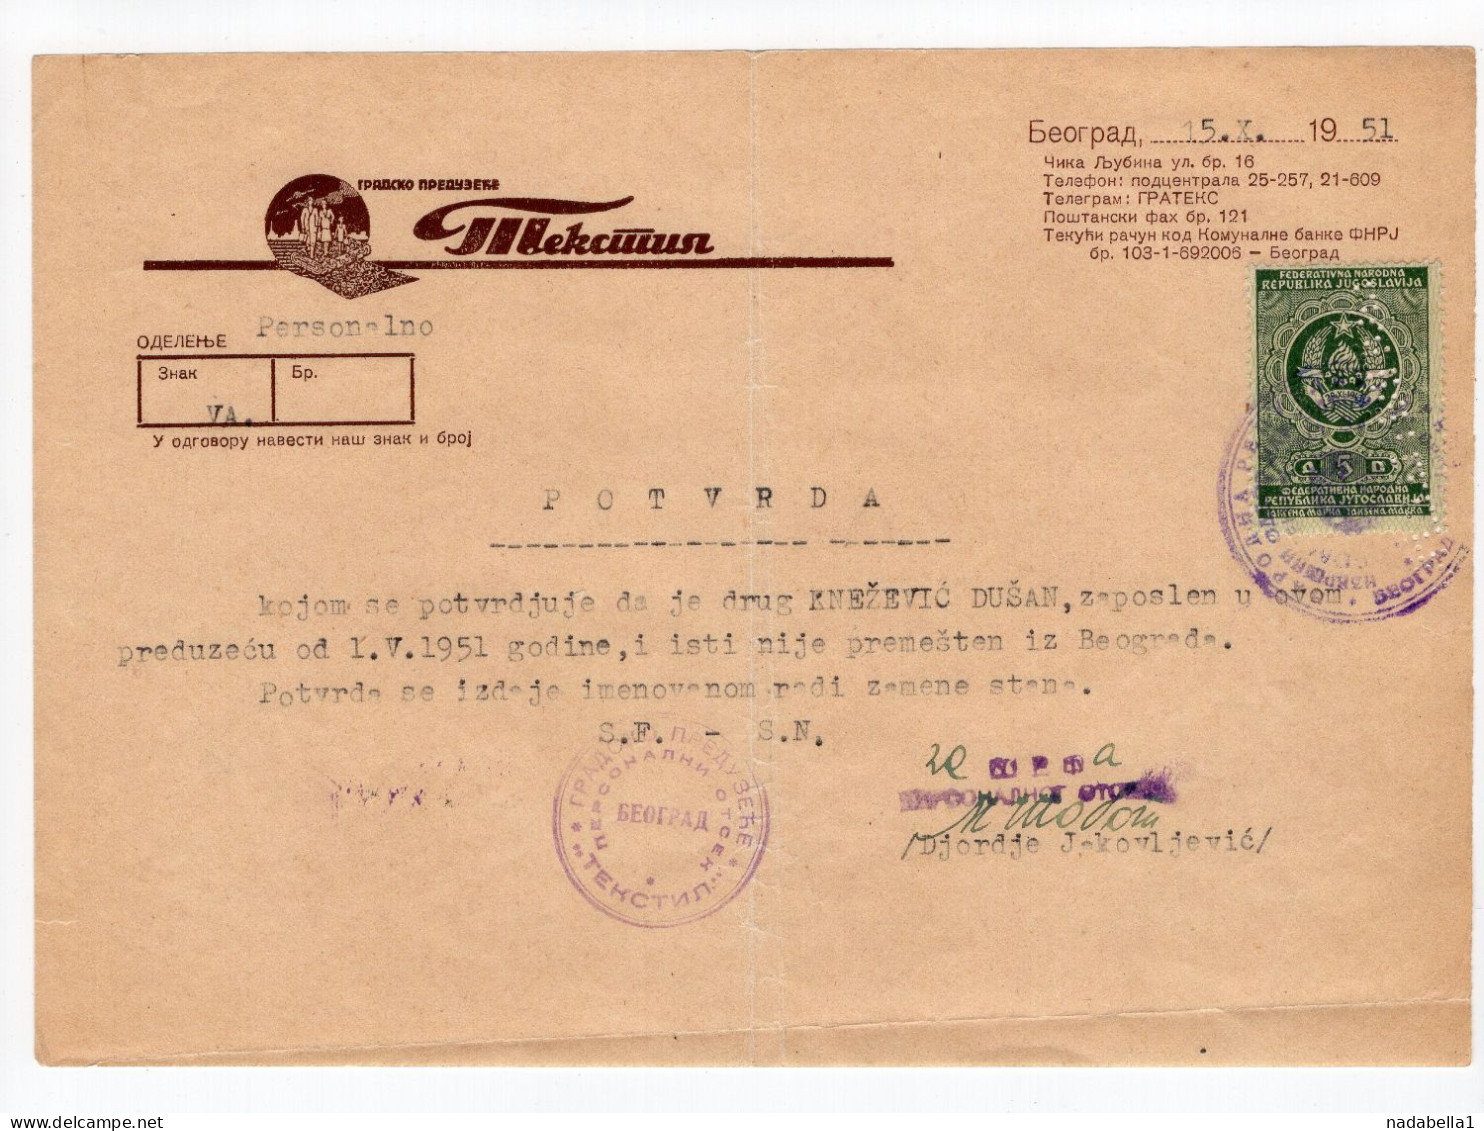 1951. YUGOSLAVIA,SERBIA,BELGRADE,TEKSTIL,TEXTILE COMPANY,JOB KVALIFIKATION CONFIRMATION,1 STATE REVENUE STAMP - Briefe U. Dokumente